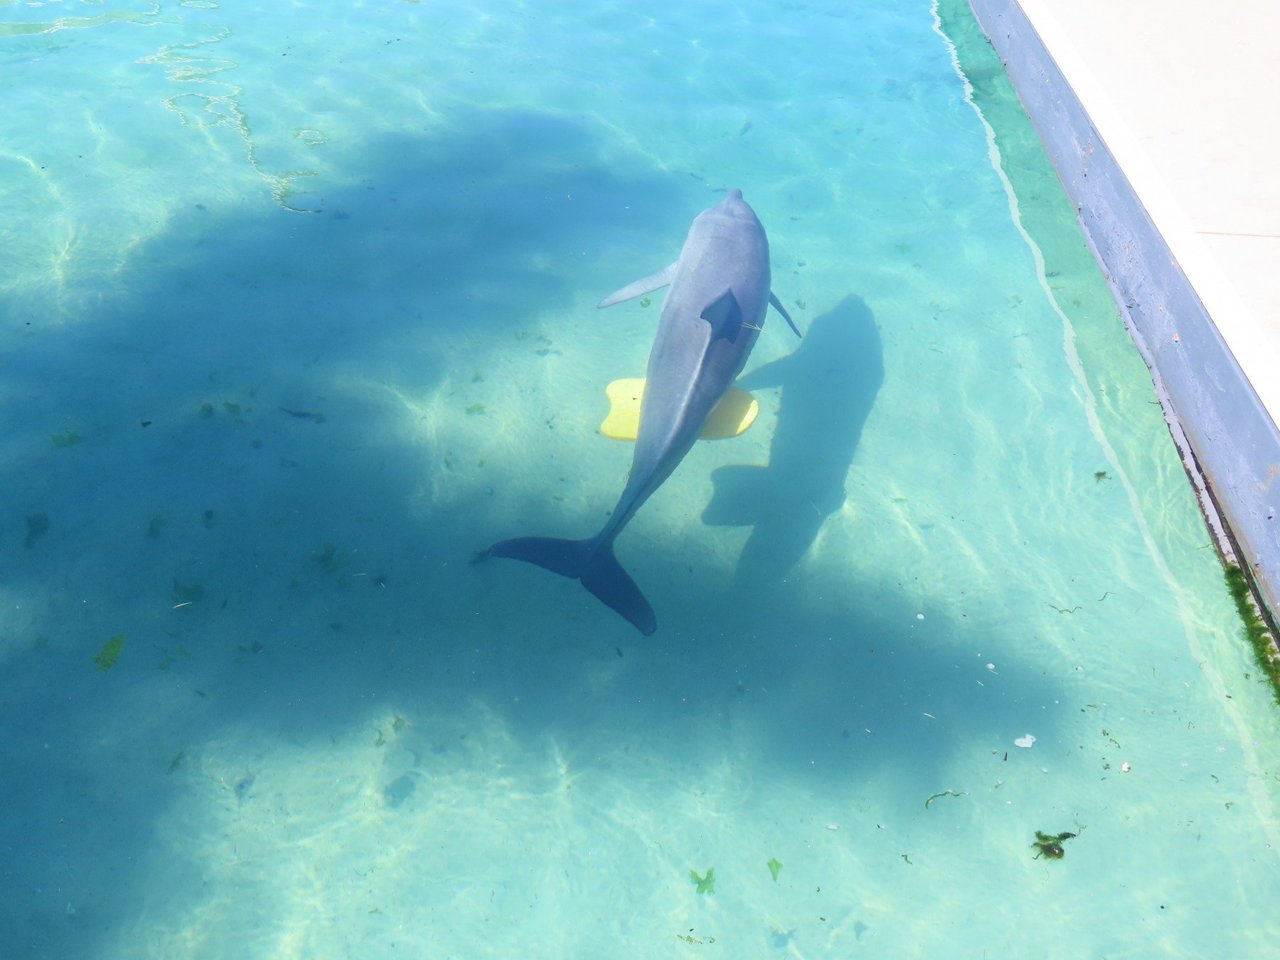 Pod of wild dolphins swimming in Mandurah, Western Australia.